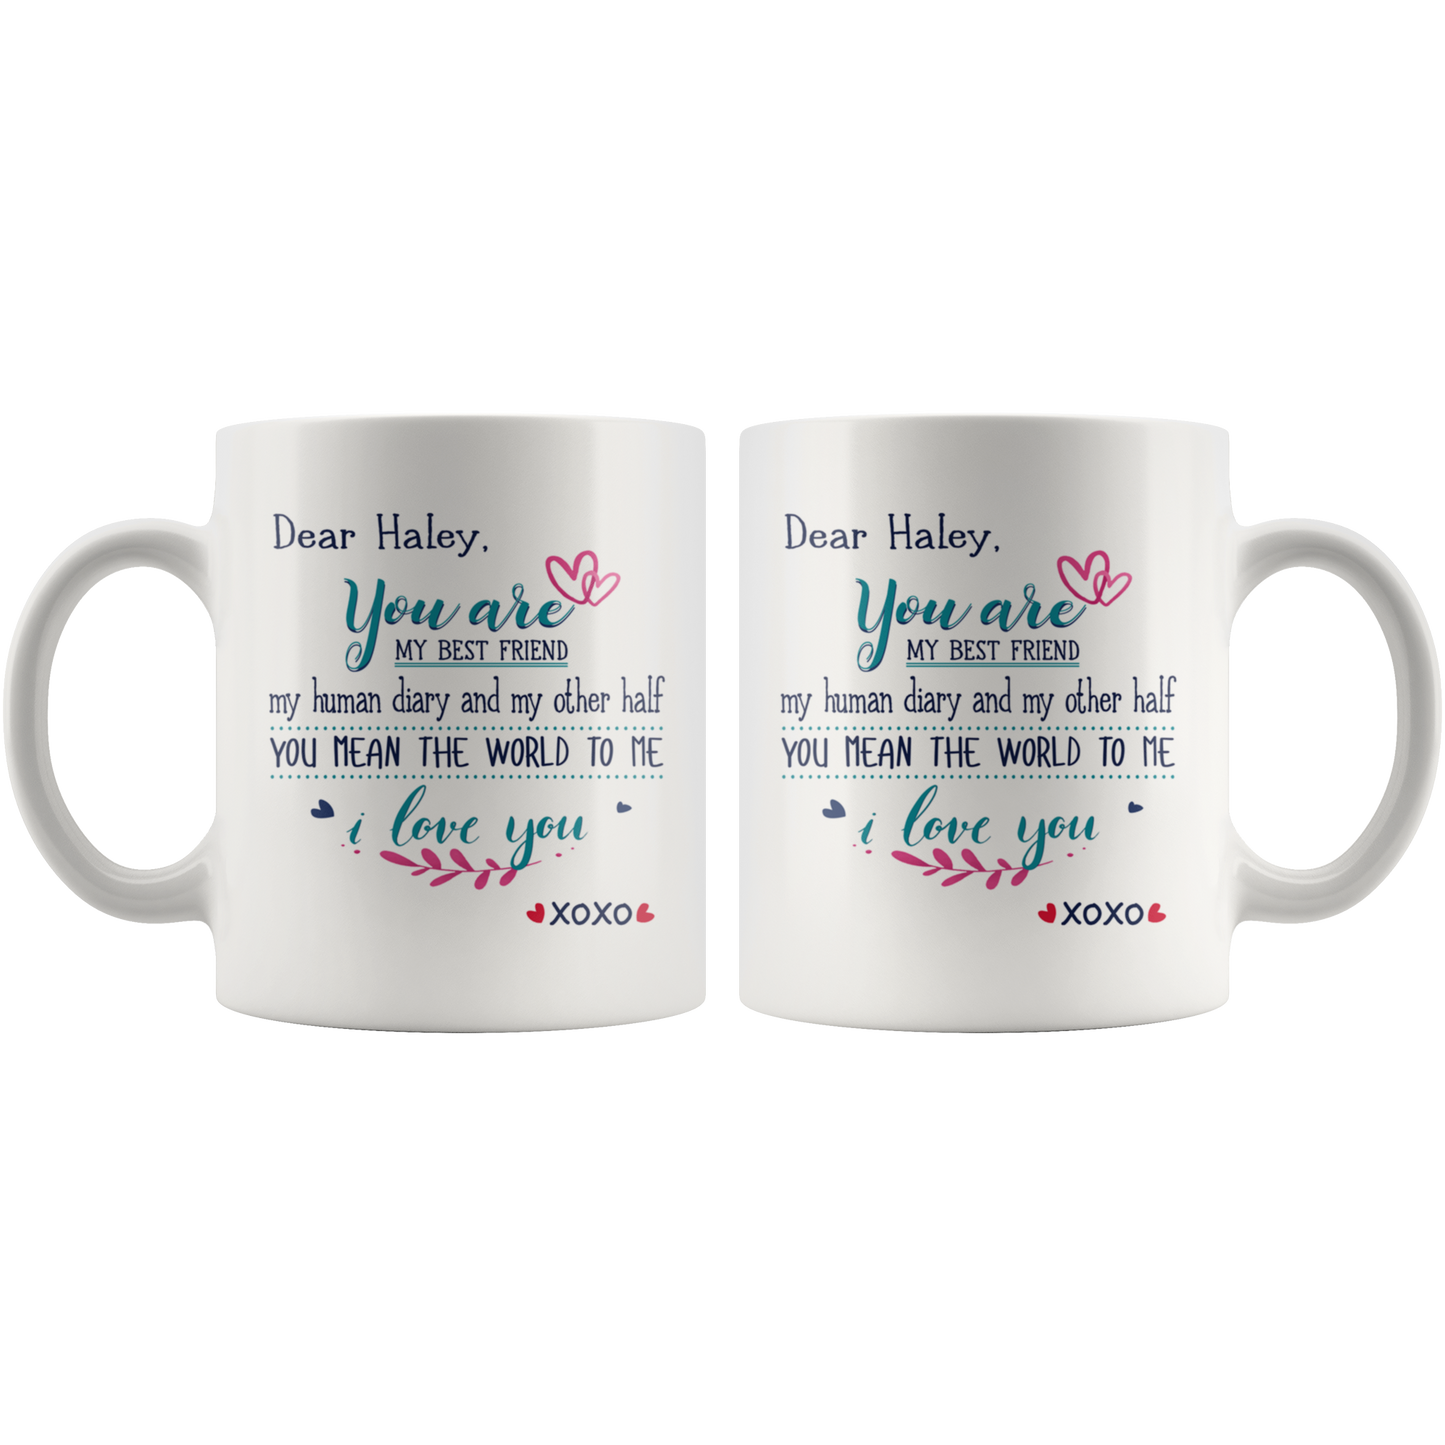 ND20452043-sp-24343 - [ Haley | 1 ]Christmas Gifts For Wife From Husband Mug XoXo 11 oz - Dear